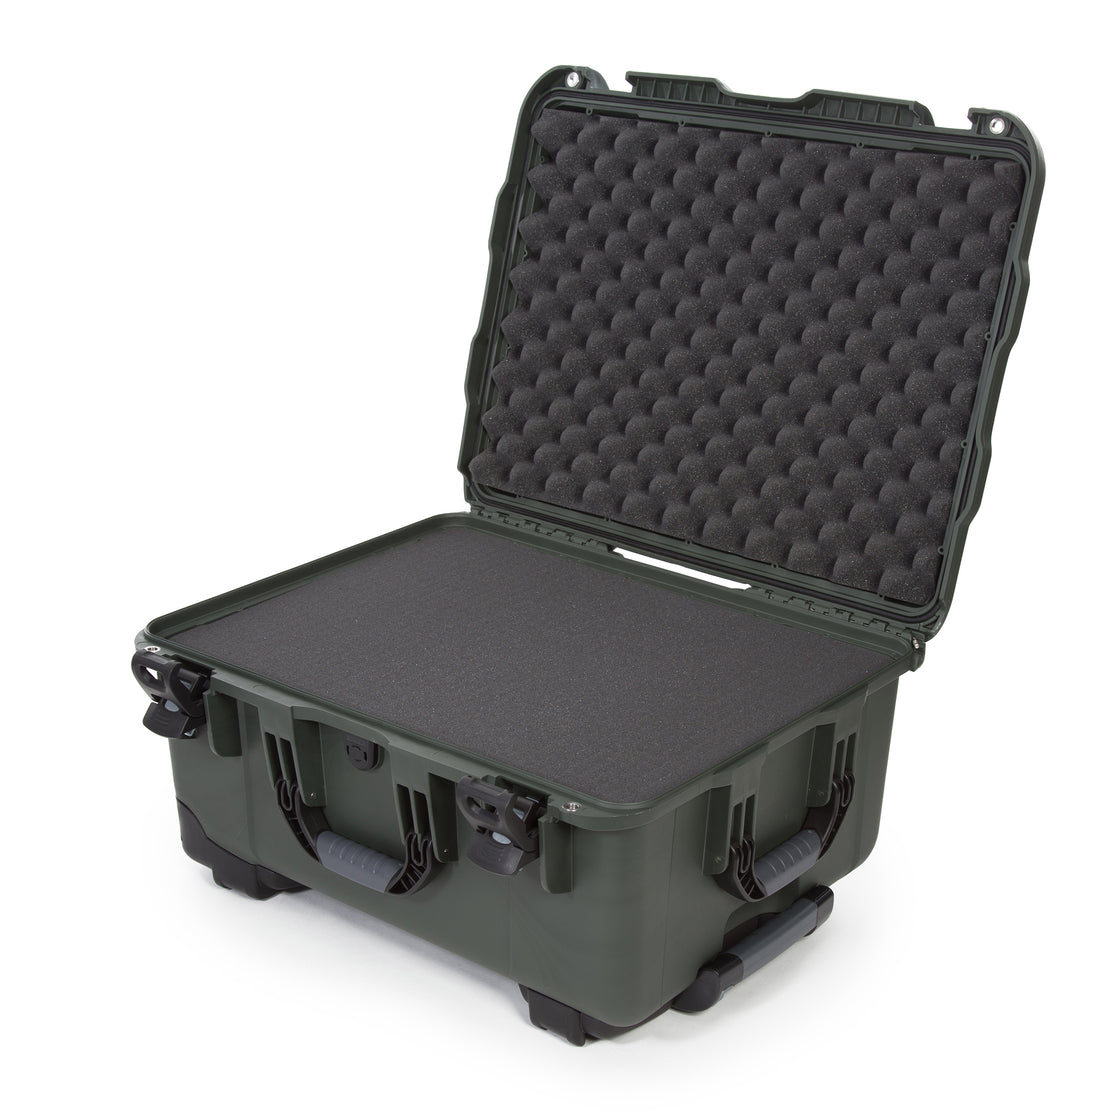 Nanuk 950-1006 Waterproof Hard Case with Wheels and Foam Insert - Olive